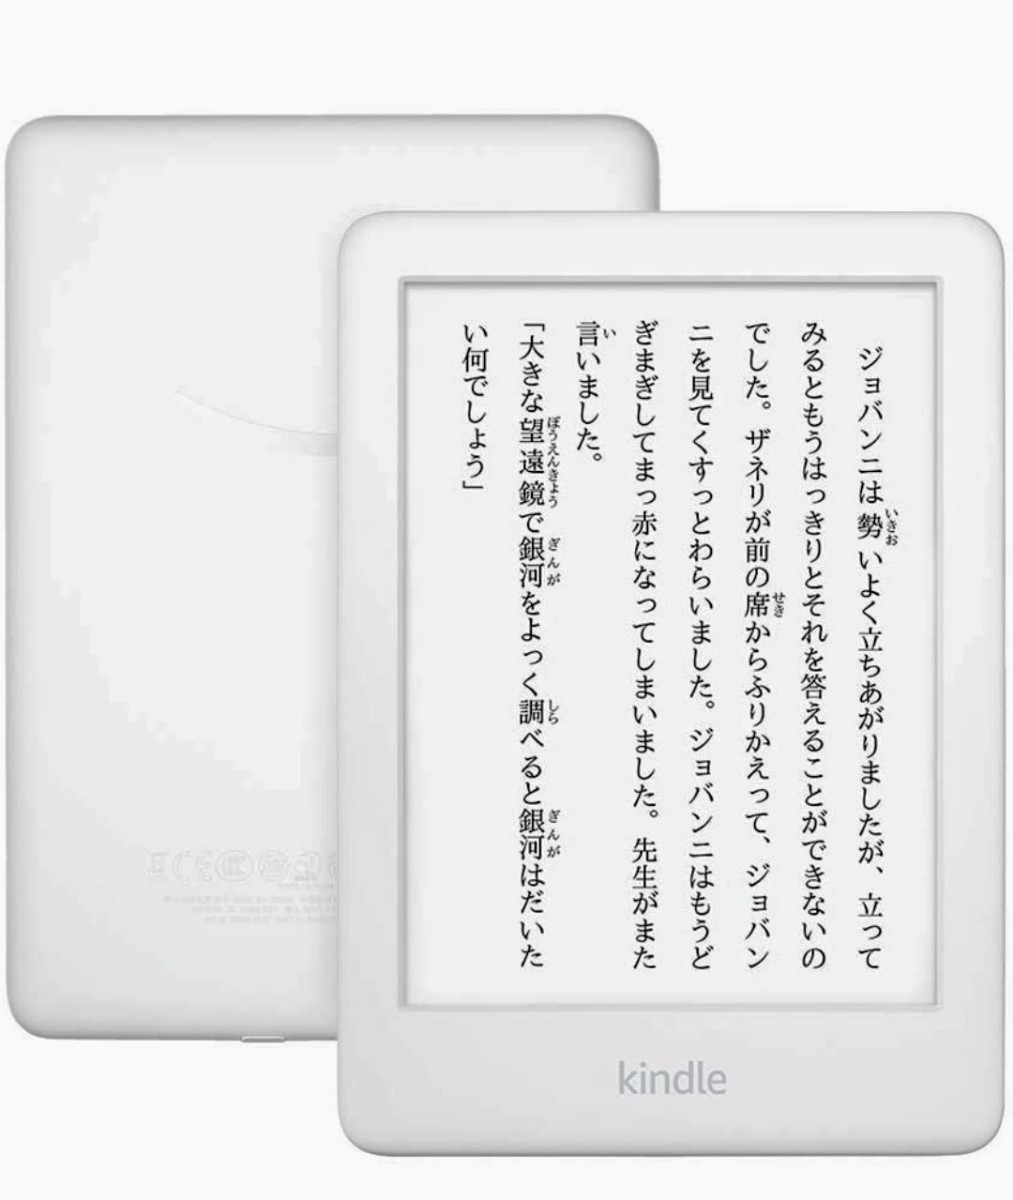 Kindle フロントライト搭載 Wi-Fi 8GB ホワイト 広告つき 電子書籍リーダー